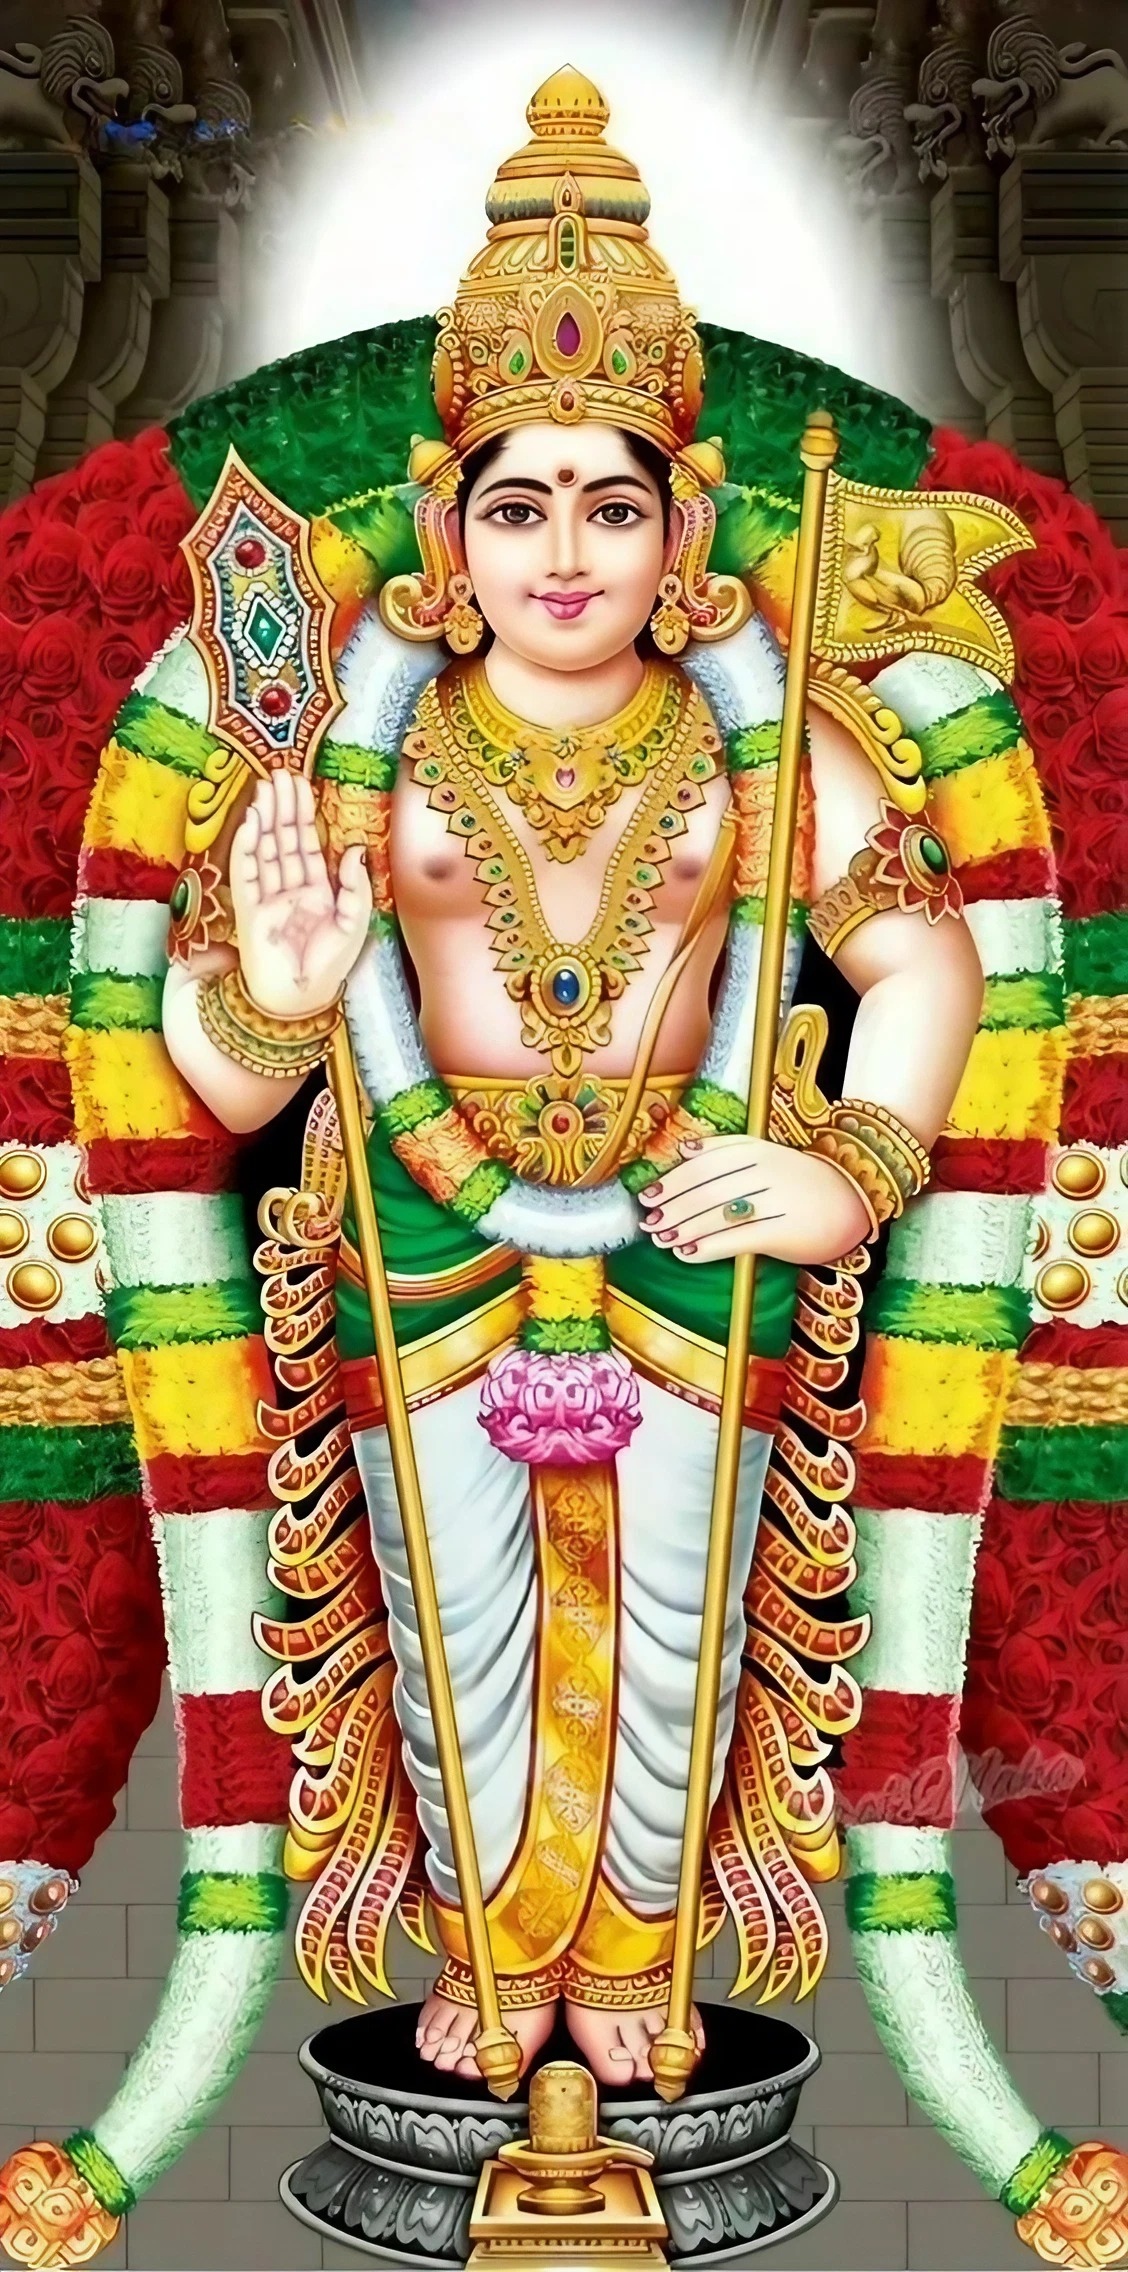 Murugan Picture - Hindu God